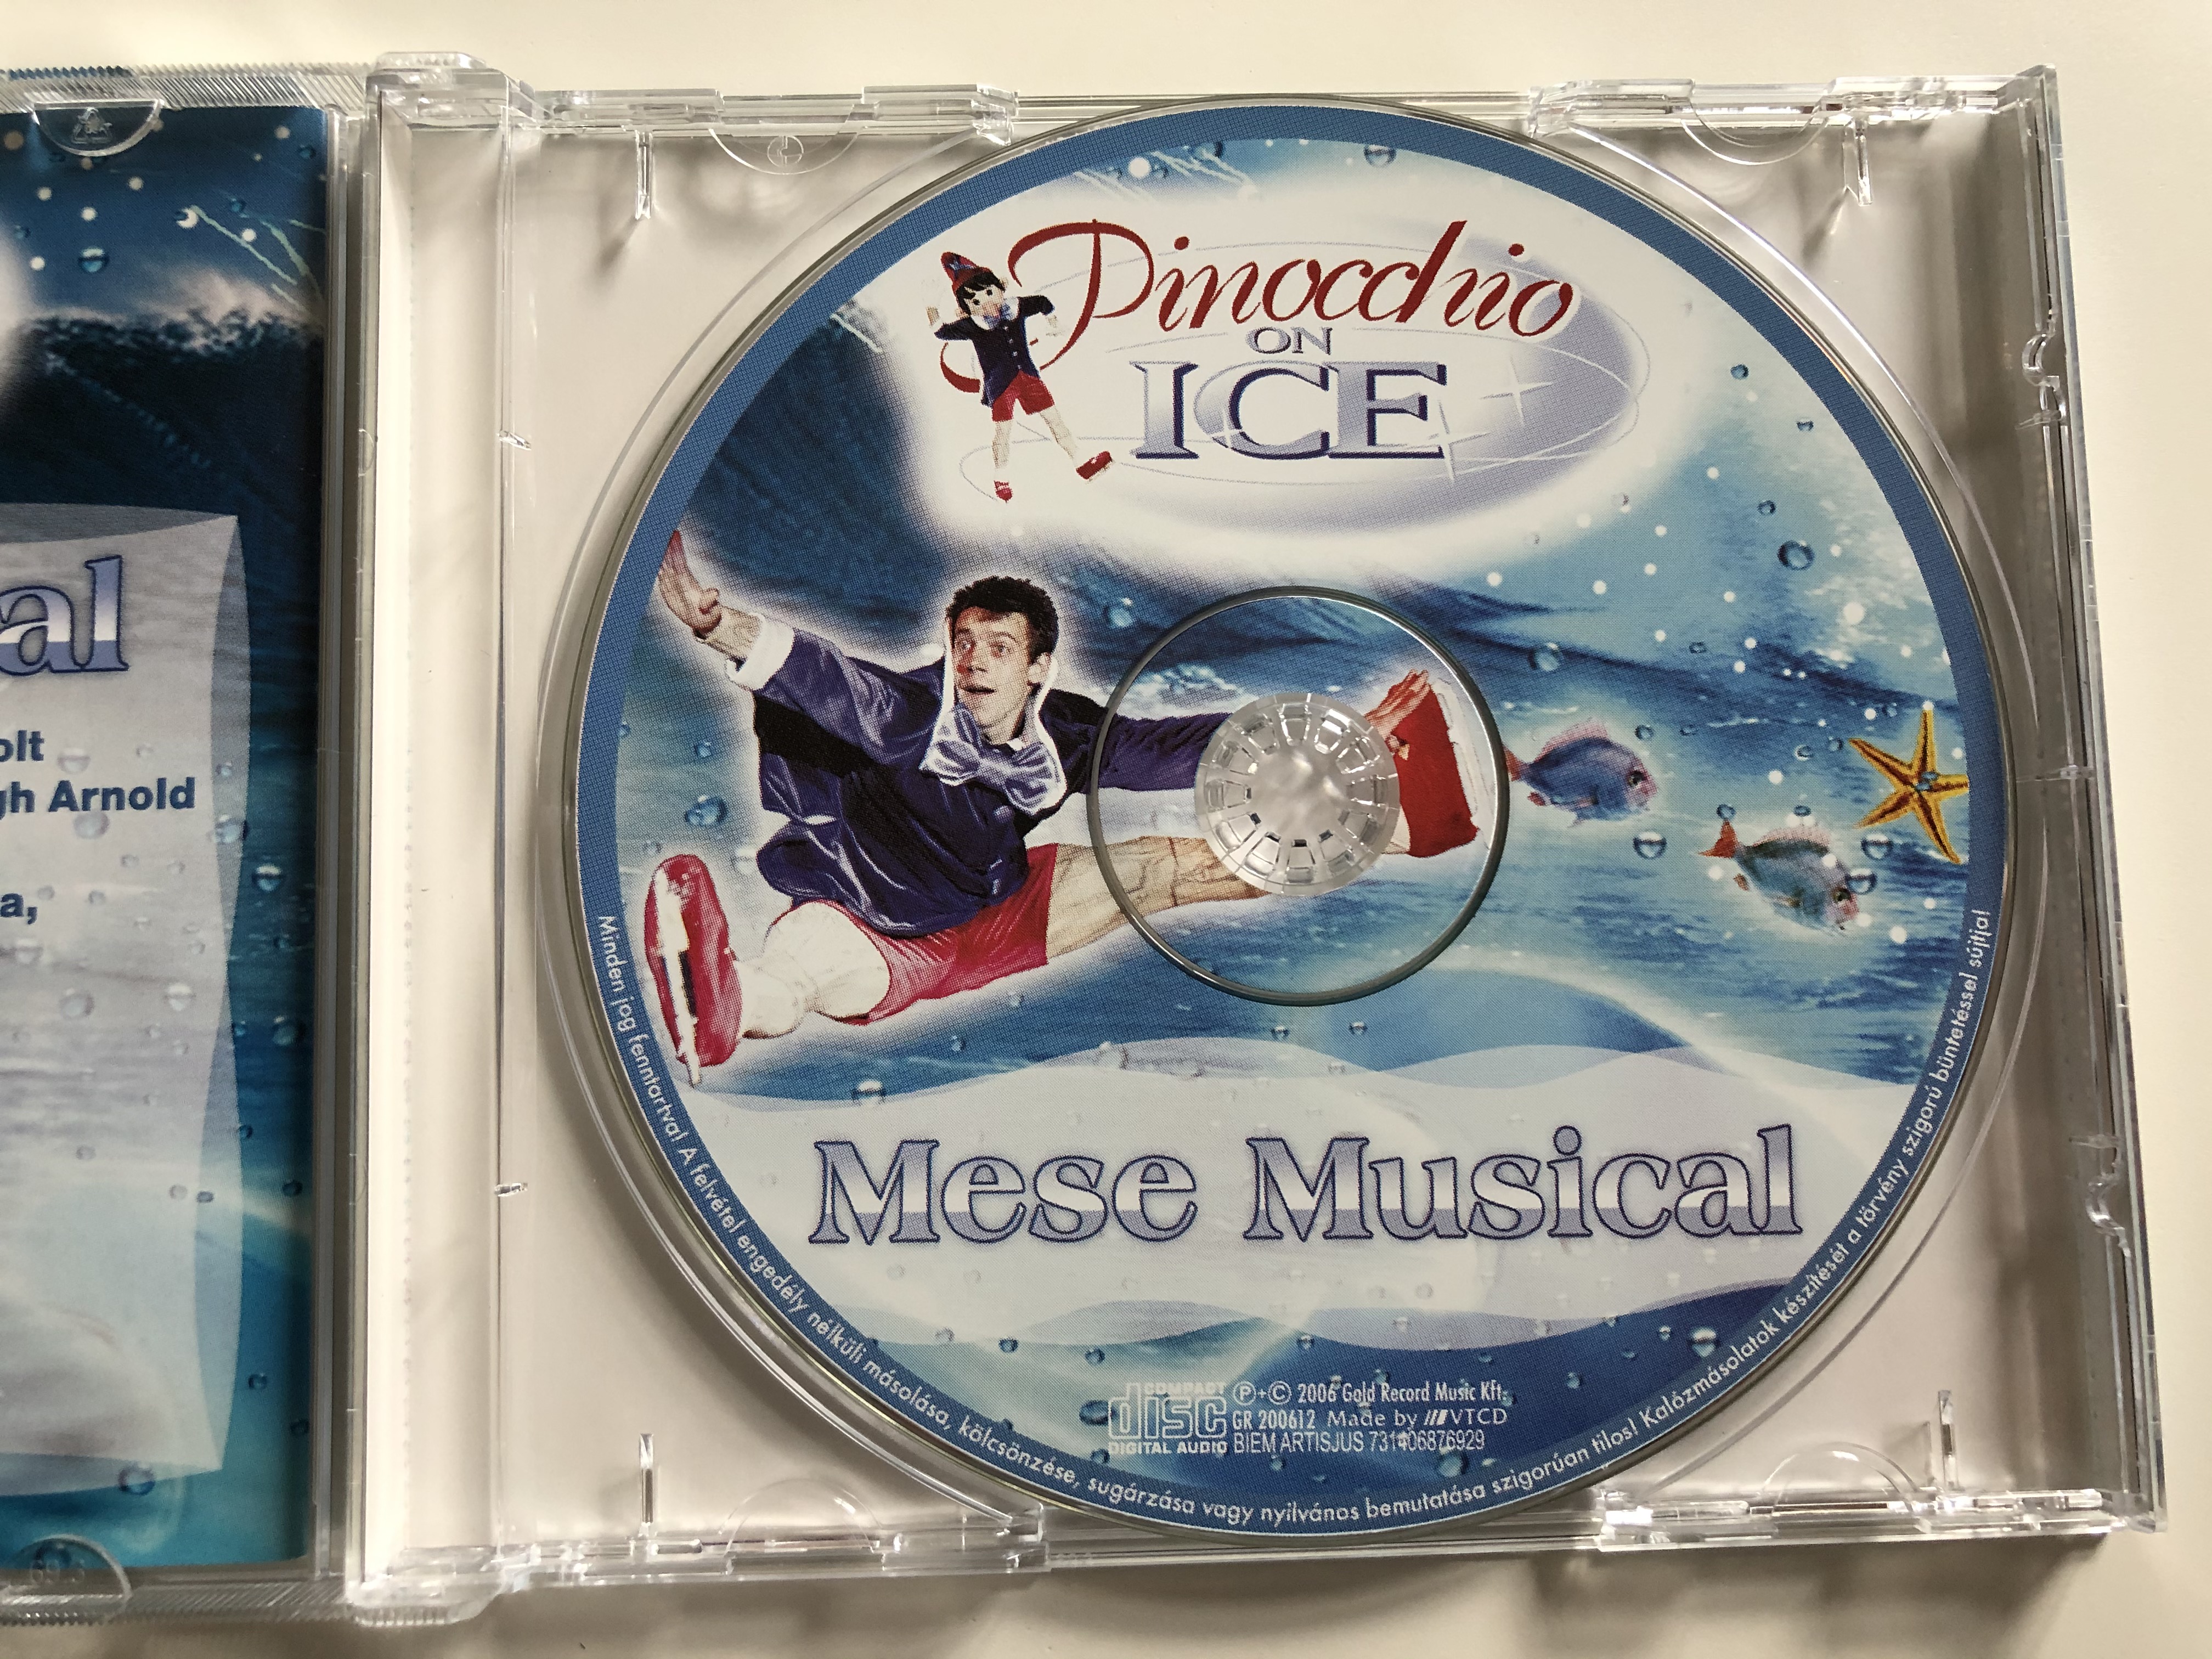 pinocchio-on-ice-mese-musical-euro-ice-audio-cd-2006-gr-200612-4-.jpg